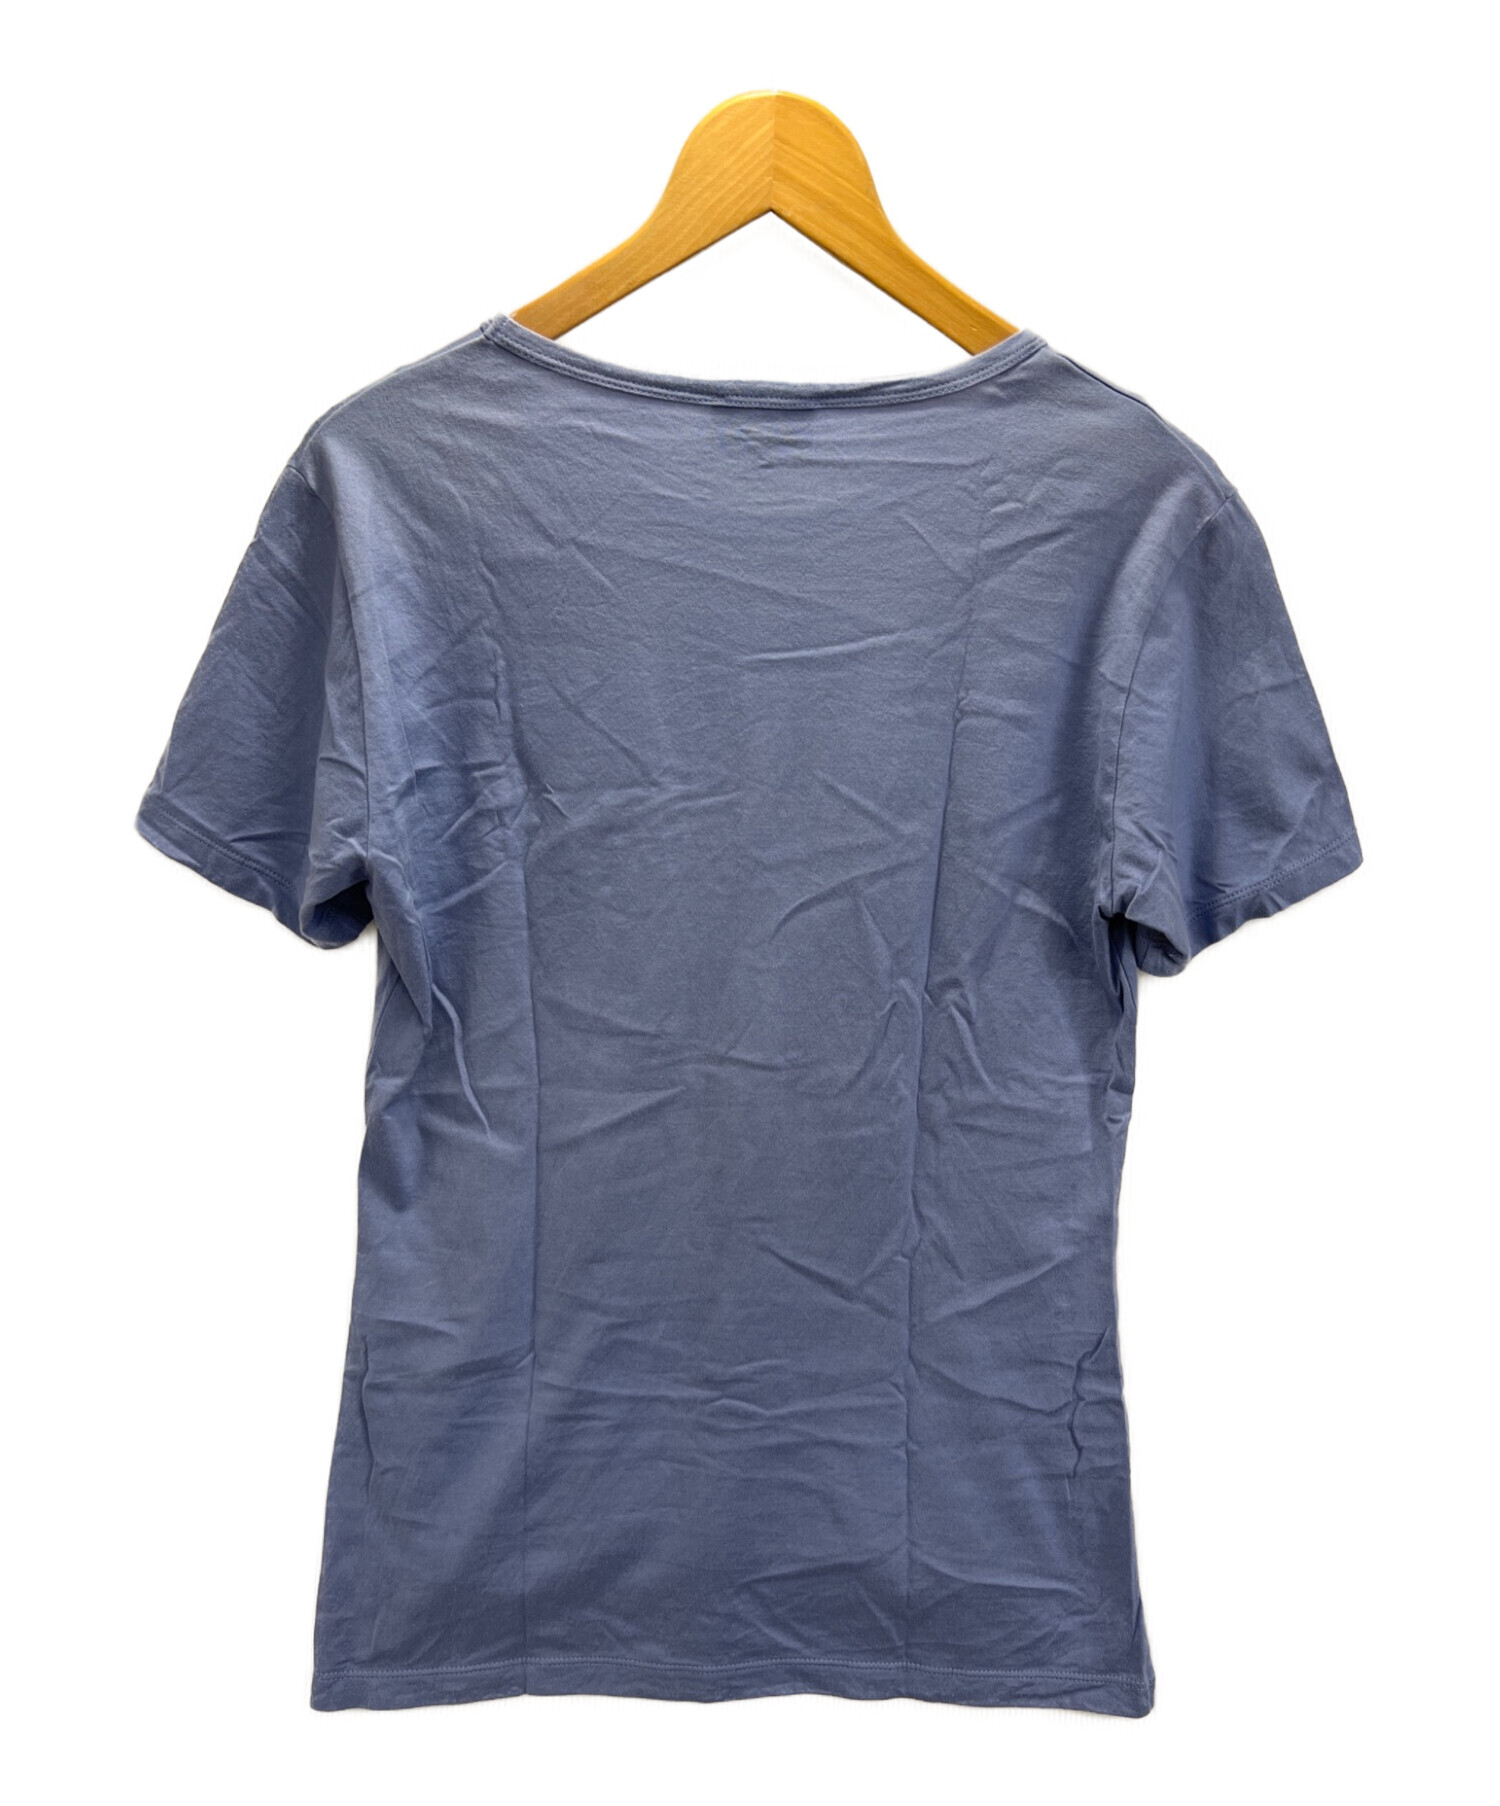 Vivienne Westwood man (ヴィヴィアン ウェストウッド マン) プリントTシャツ ブルー サイズ:46